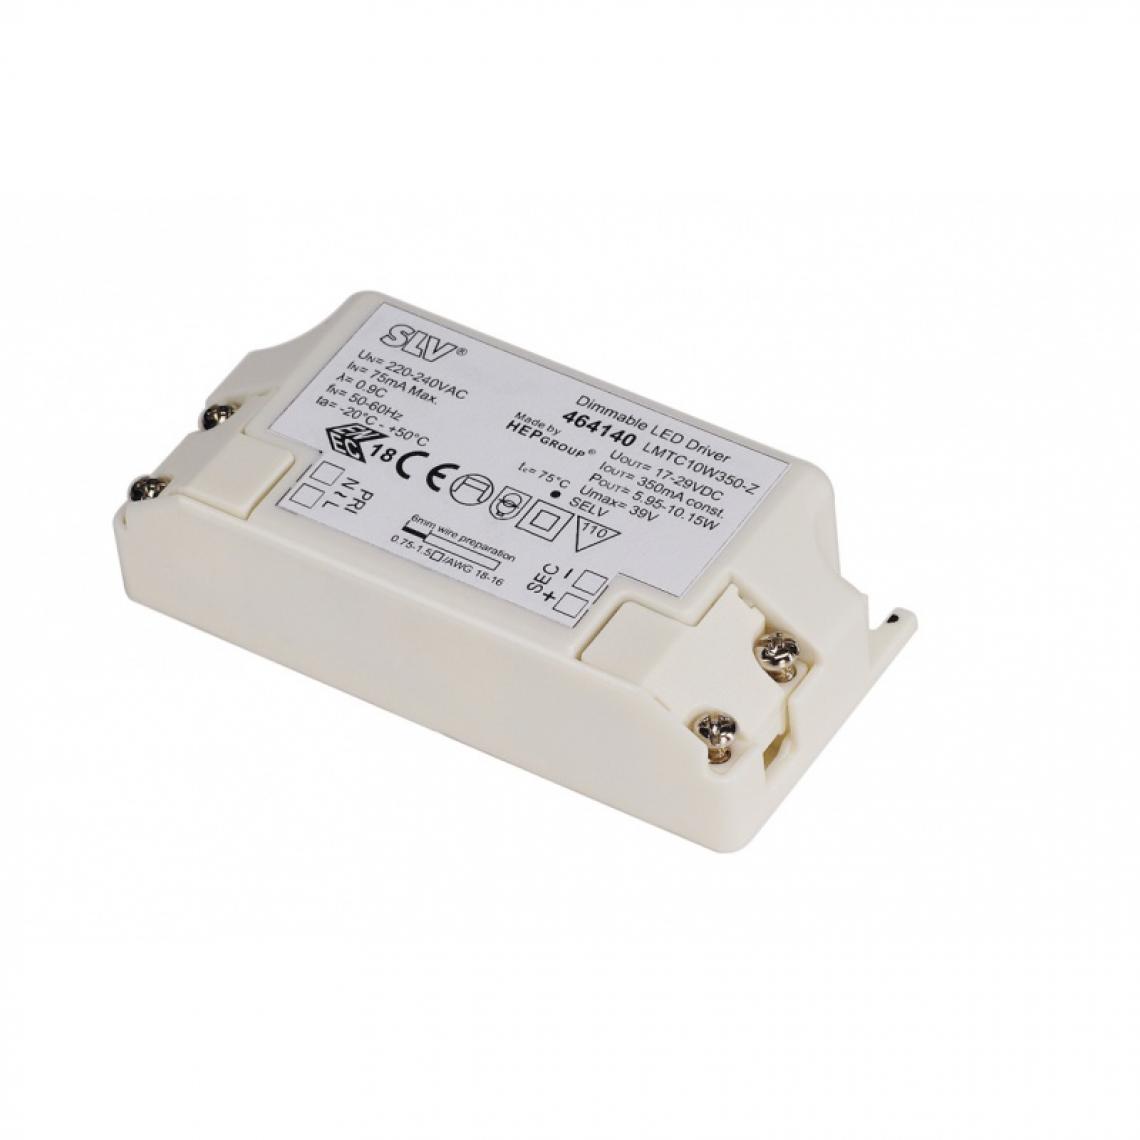 Slv - ALIMENTATION LED 10W, 350mA, serre-câble inclus, variable - Convertisseurs